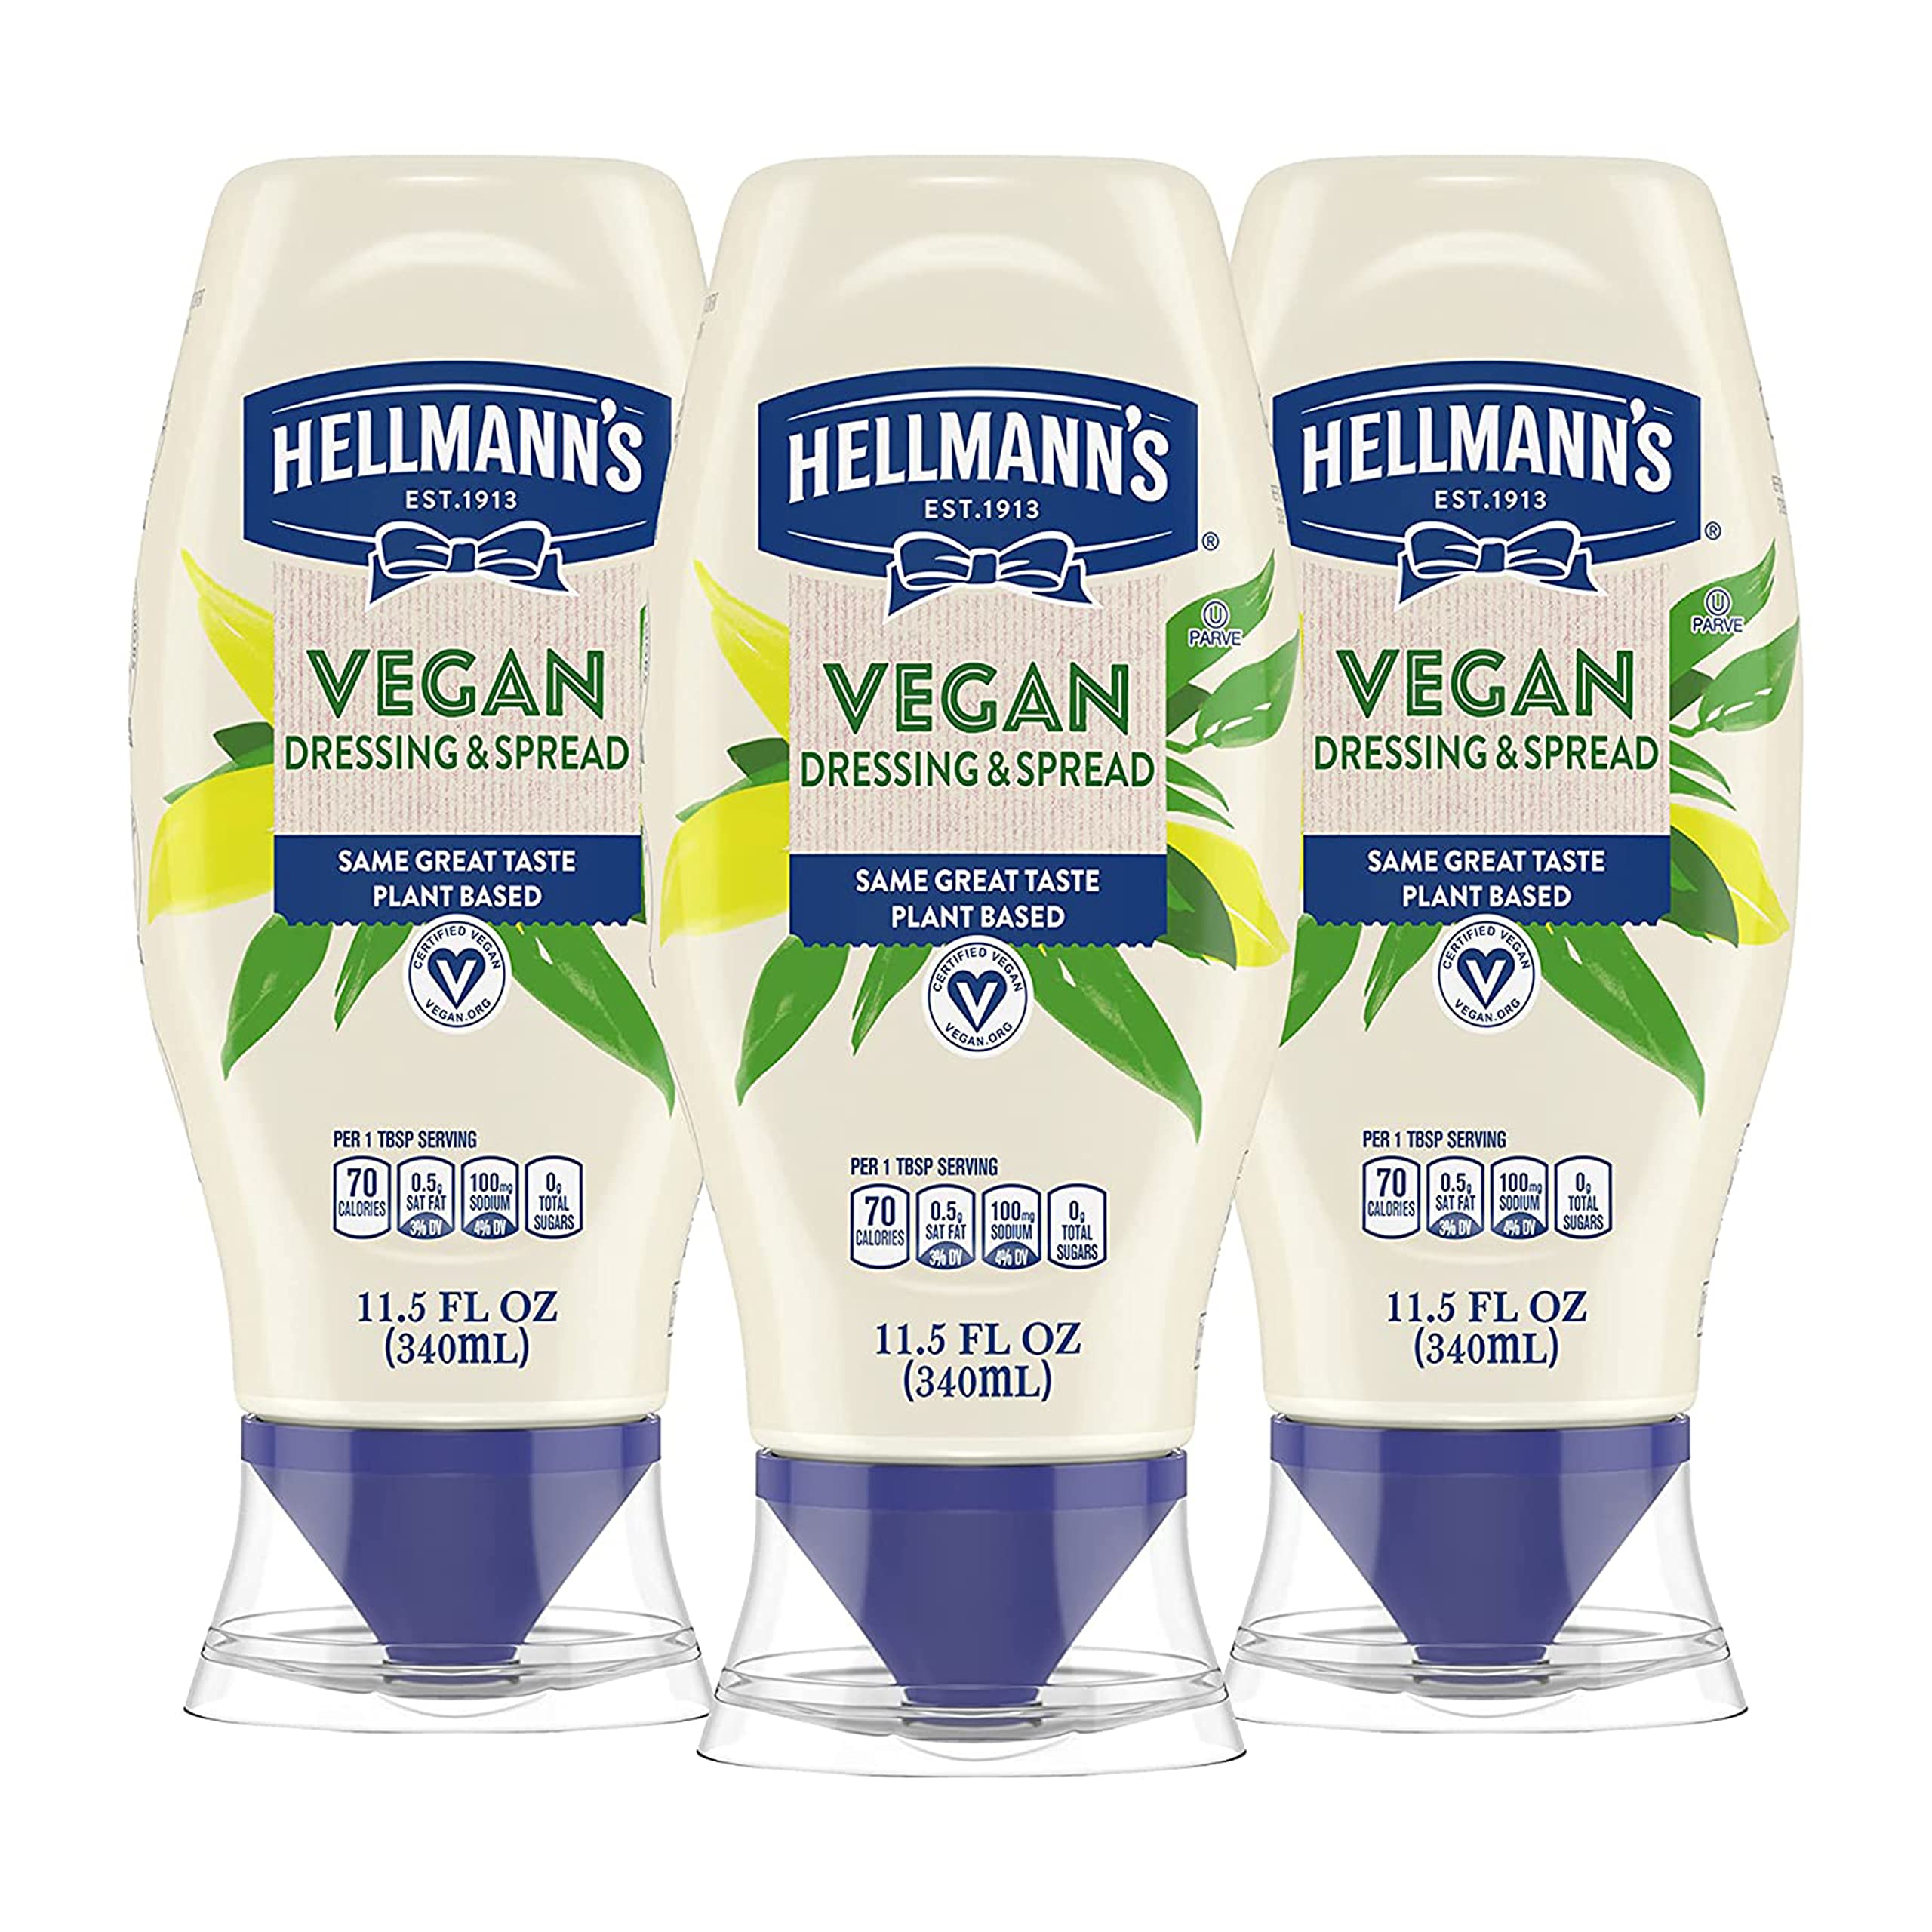 Hellmann's Vegan Dressing and Spread